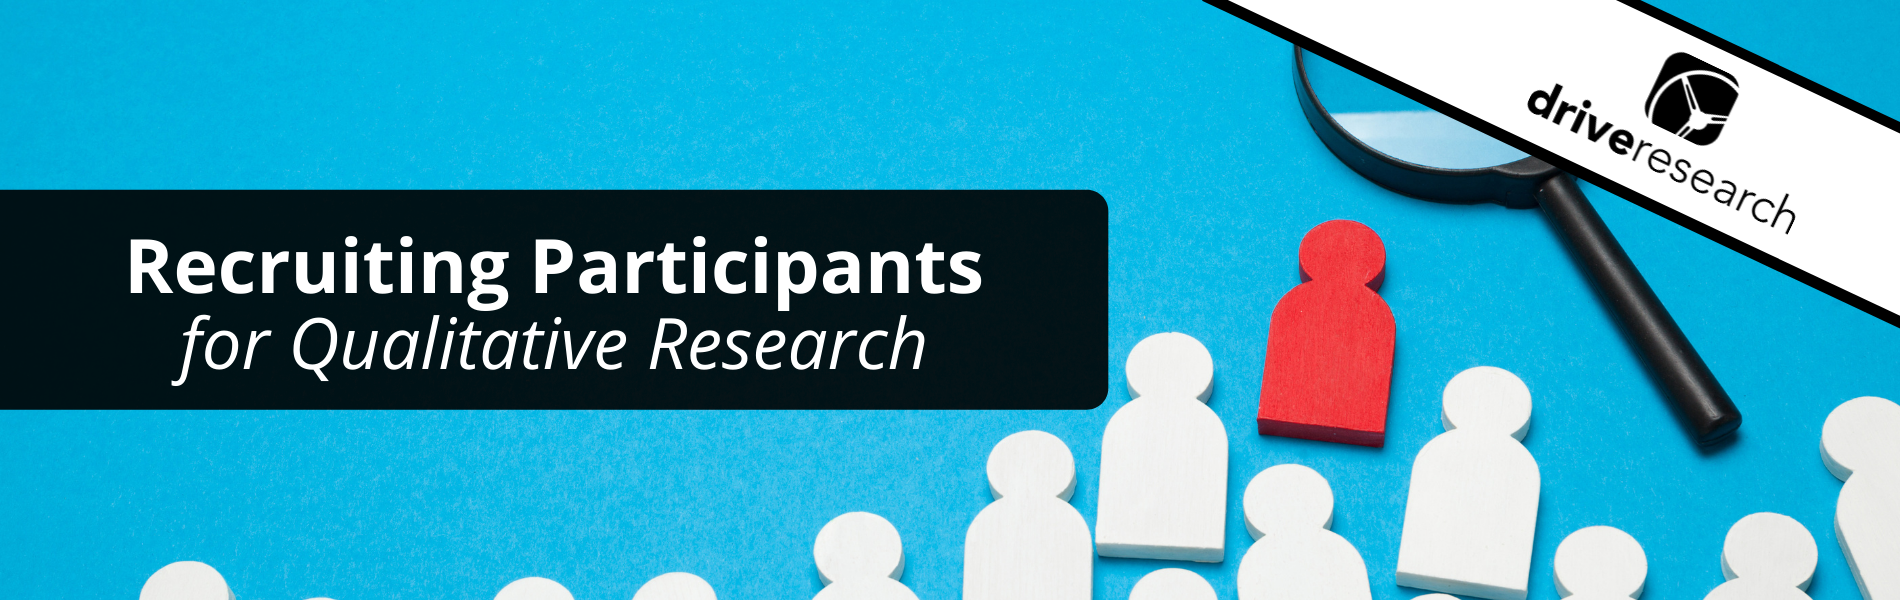 methods of recruitment in qualitative research